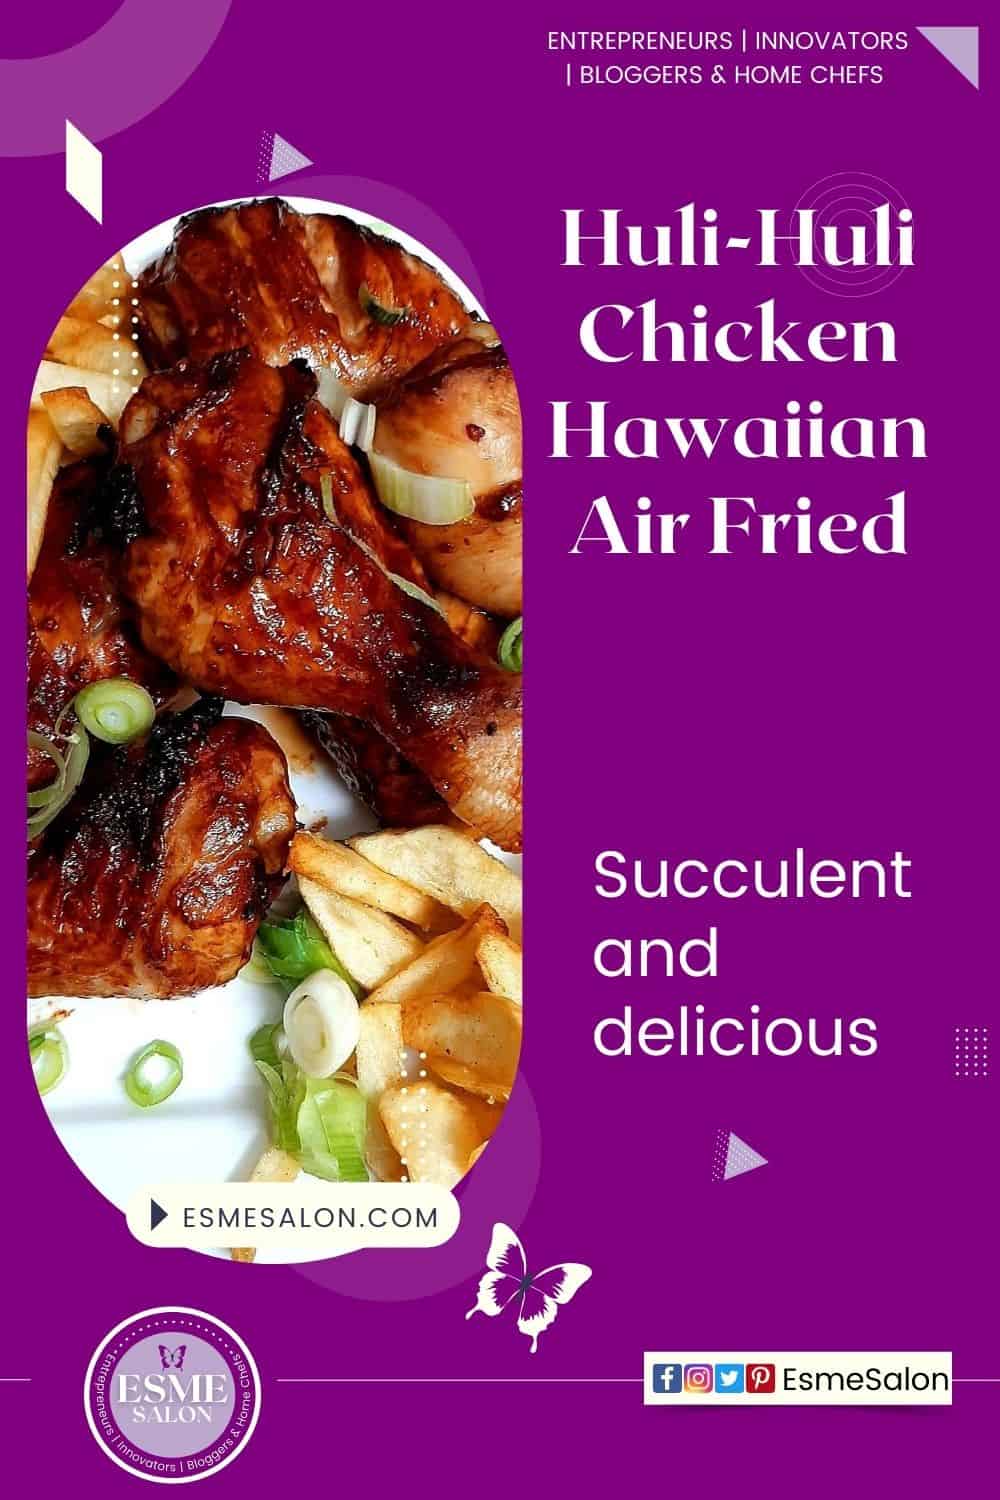 an image of platters with Hawaiian Air Fried Huli-Huli Chicken